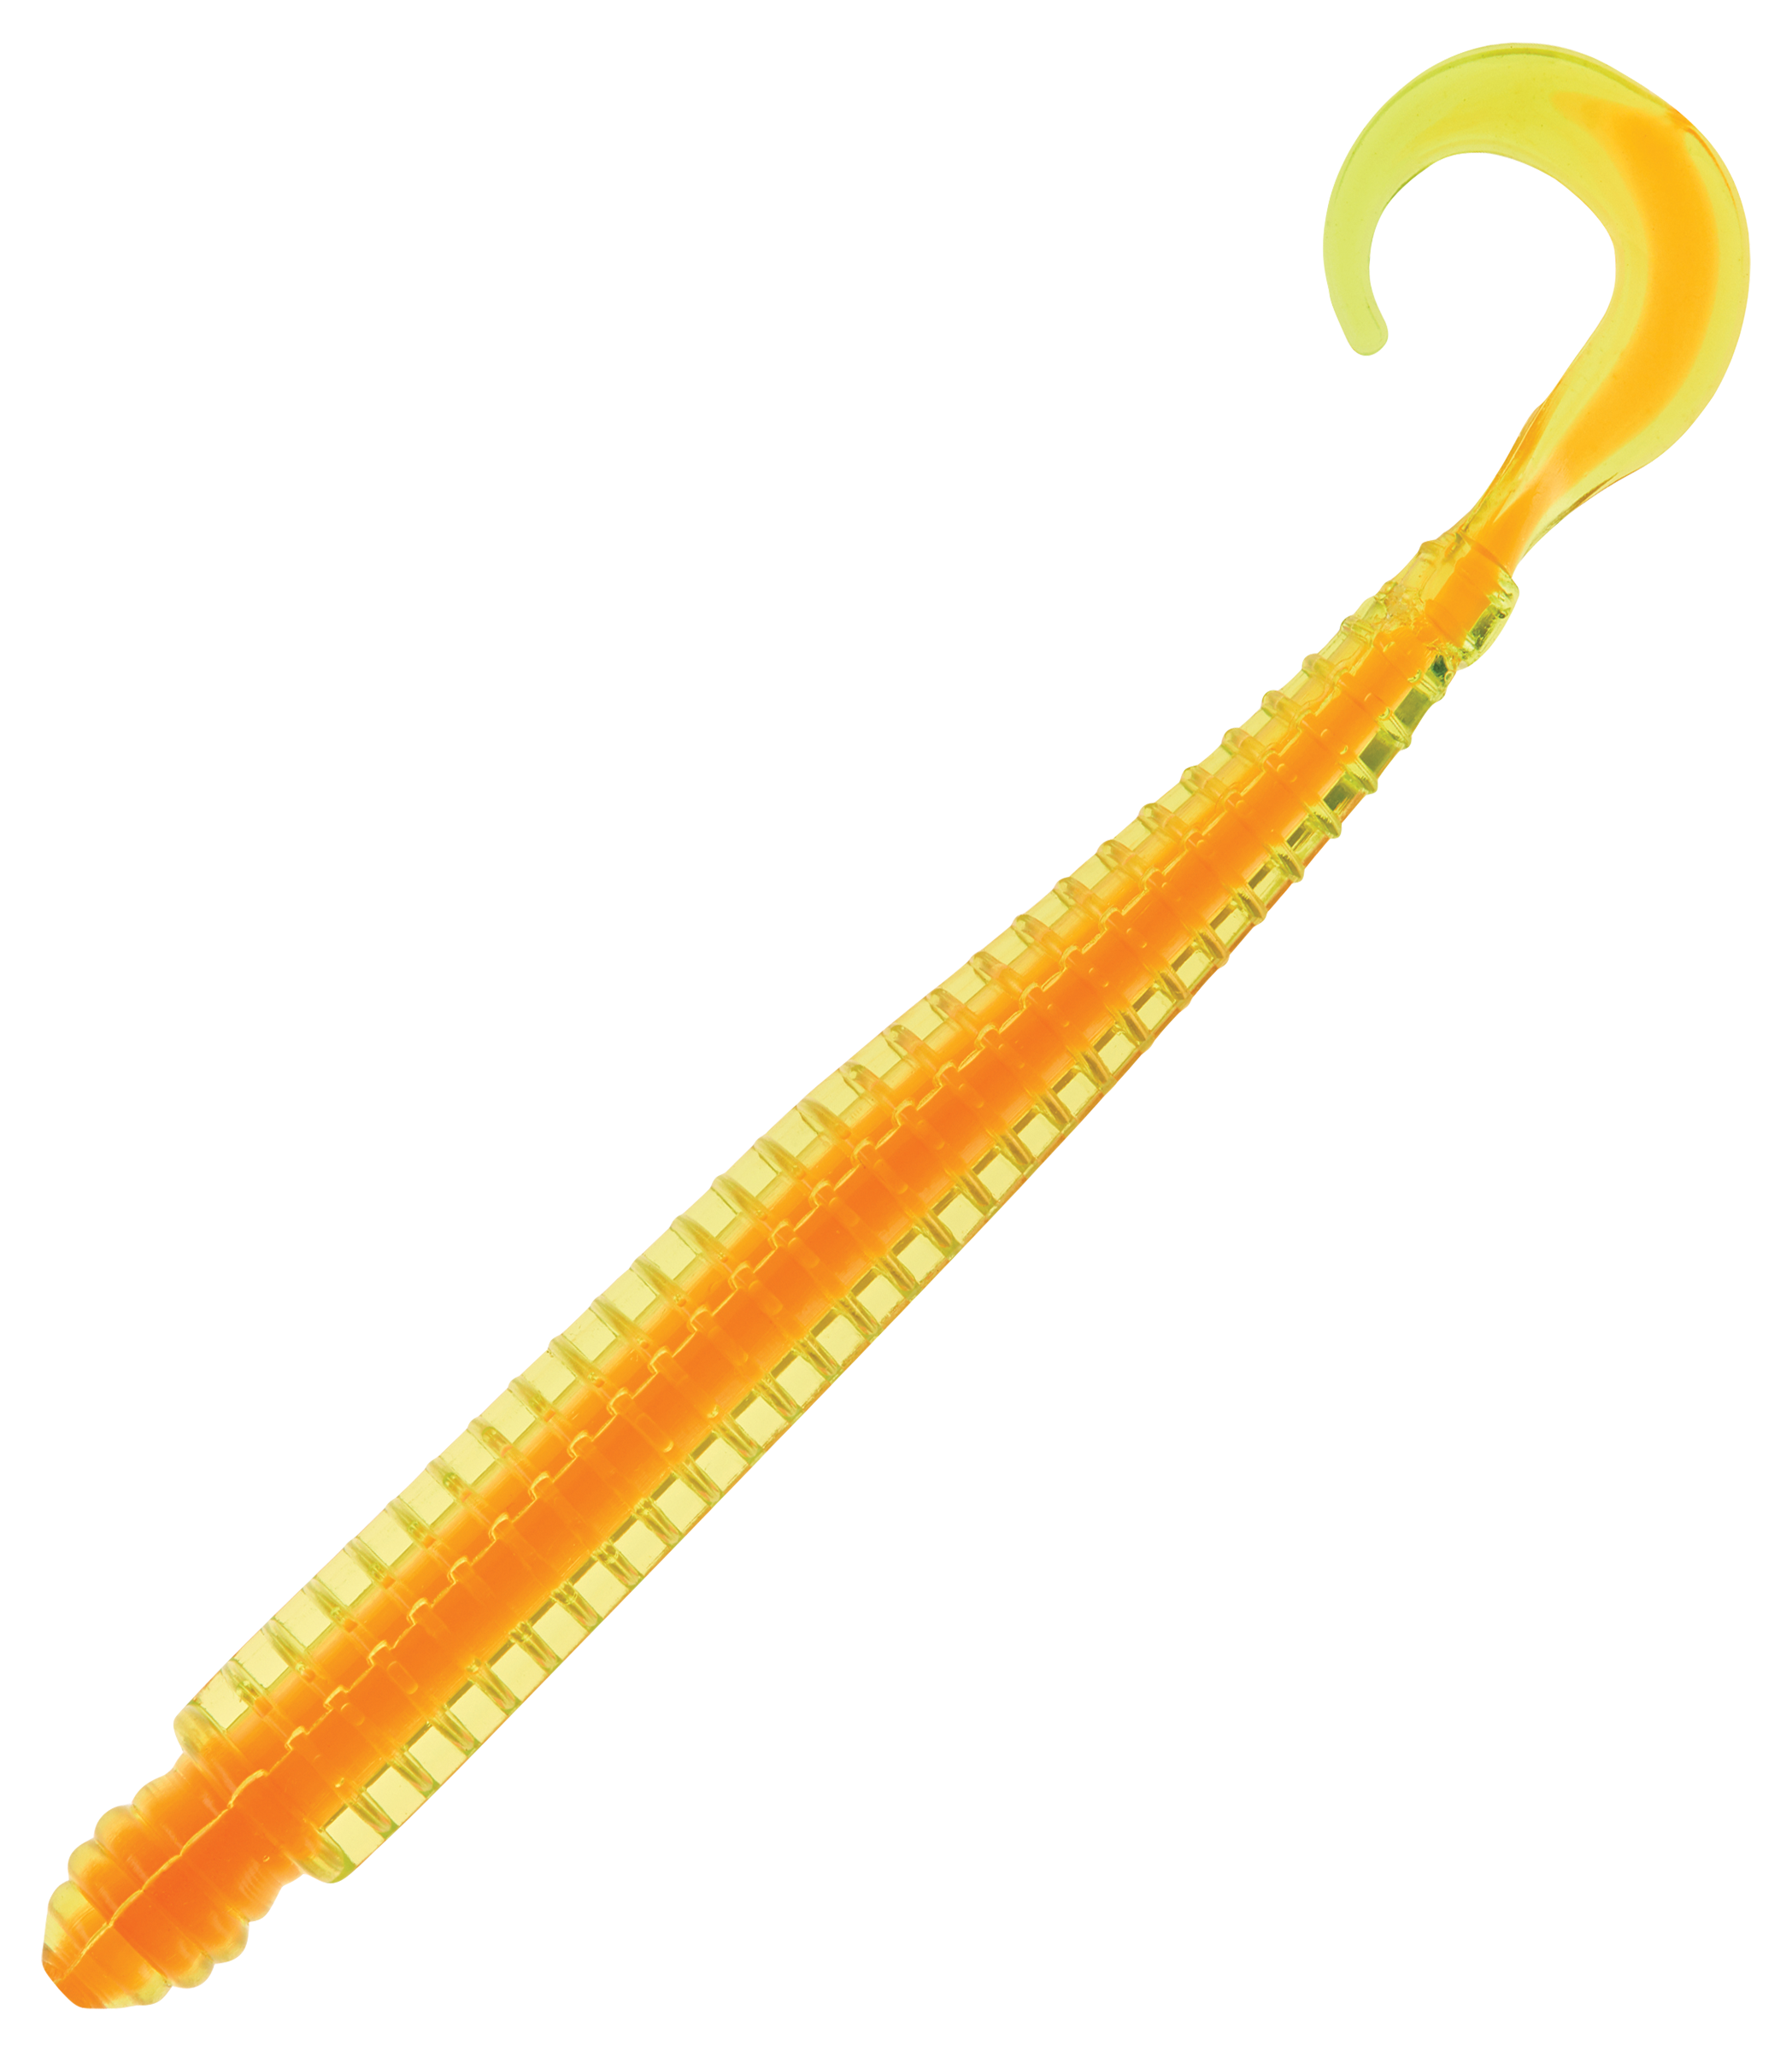 Mister Twister 4 Ringworm - Chartreuse/Orange